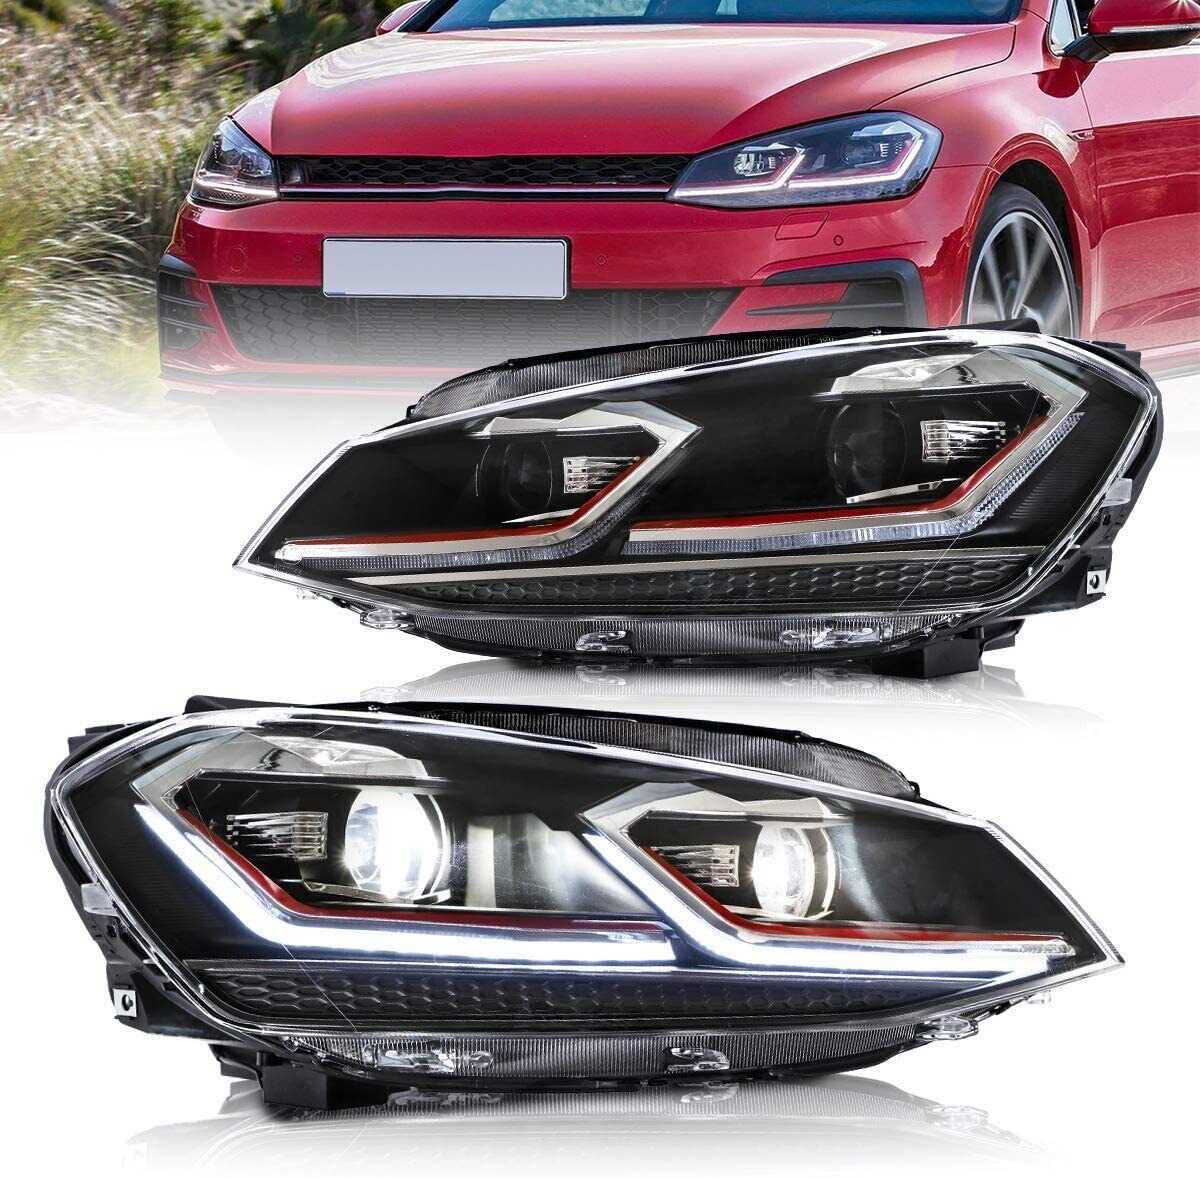 VLAND FULL LED Headlights For Volkswagen Golf MK7.5 2018-21 Fits Halogen Version